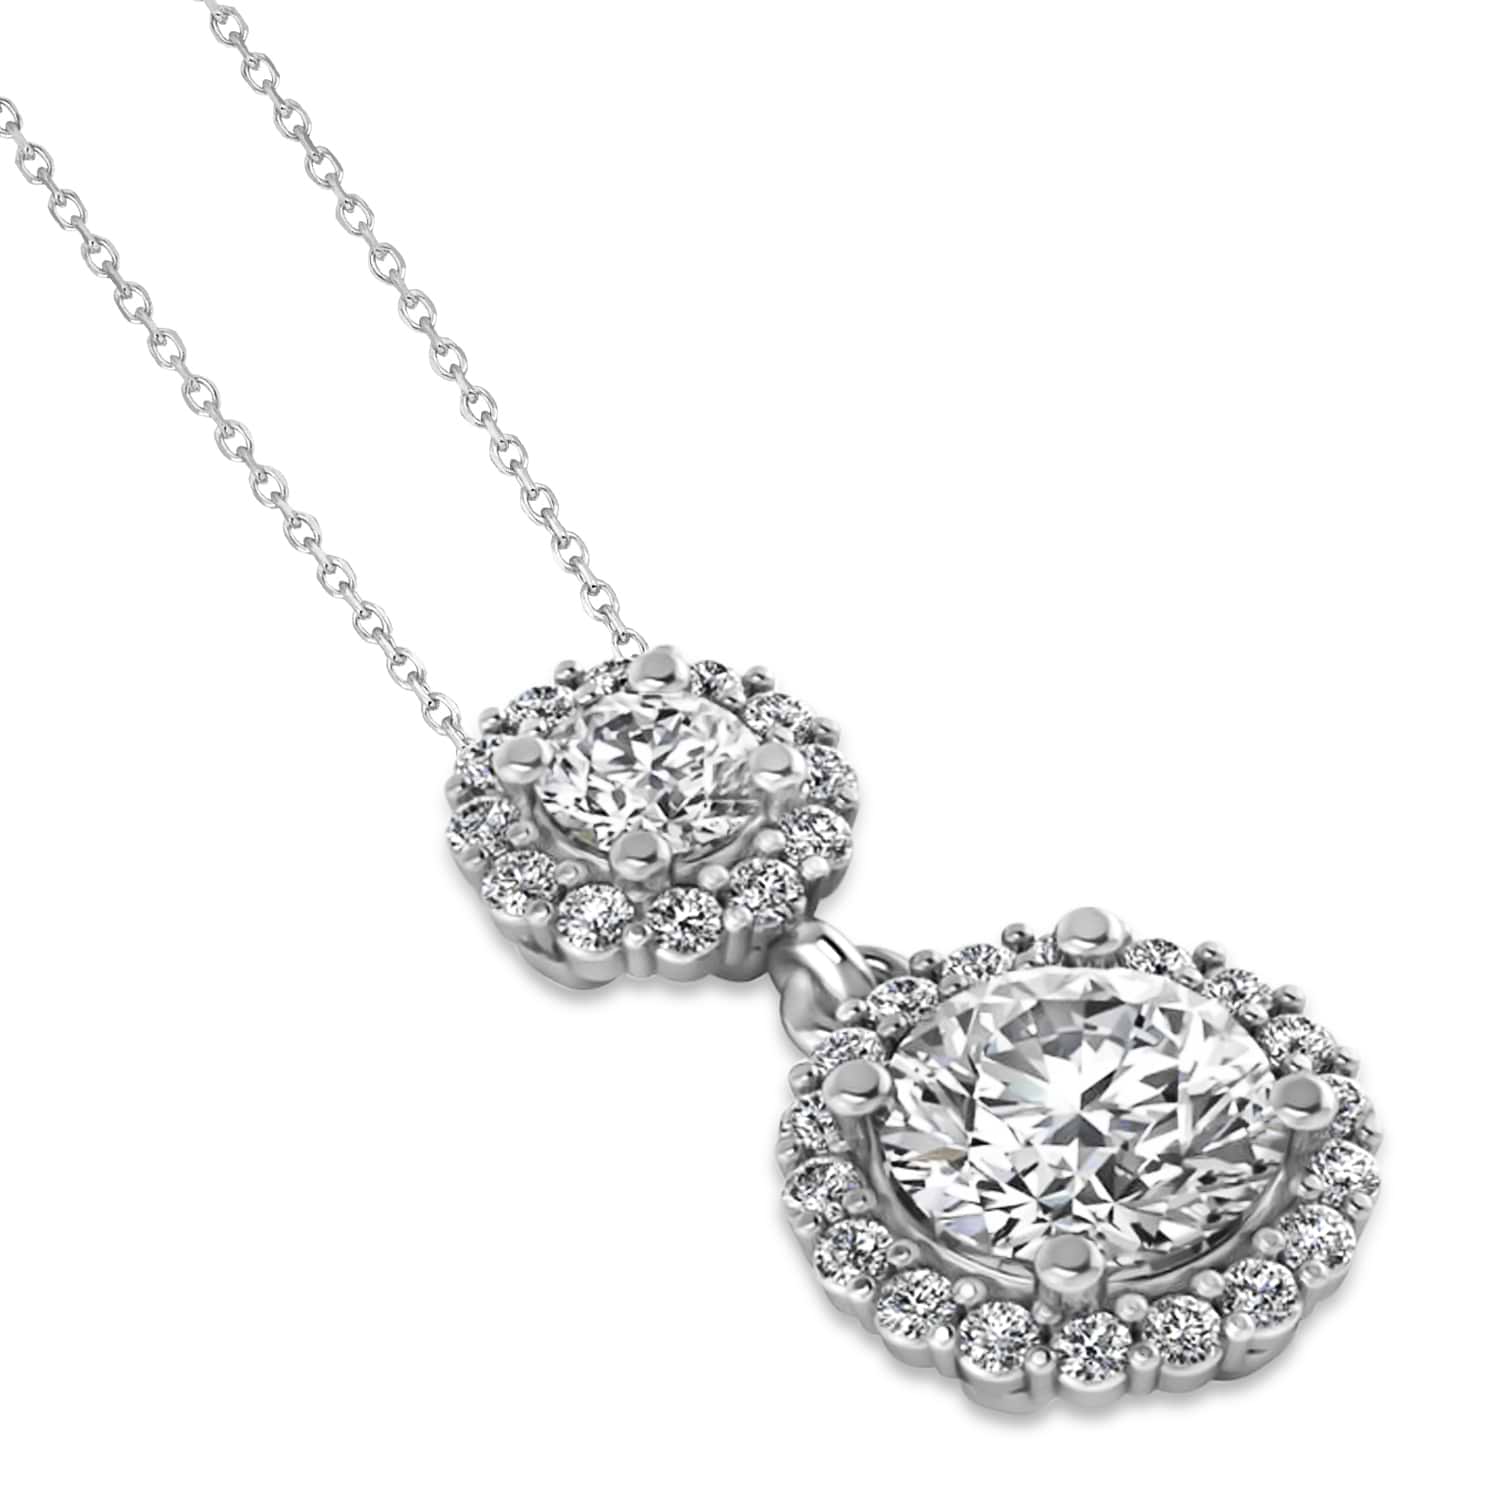 Two Stone Halo Diamond Pendant Necklace 14k White Gold (1.50ct)